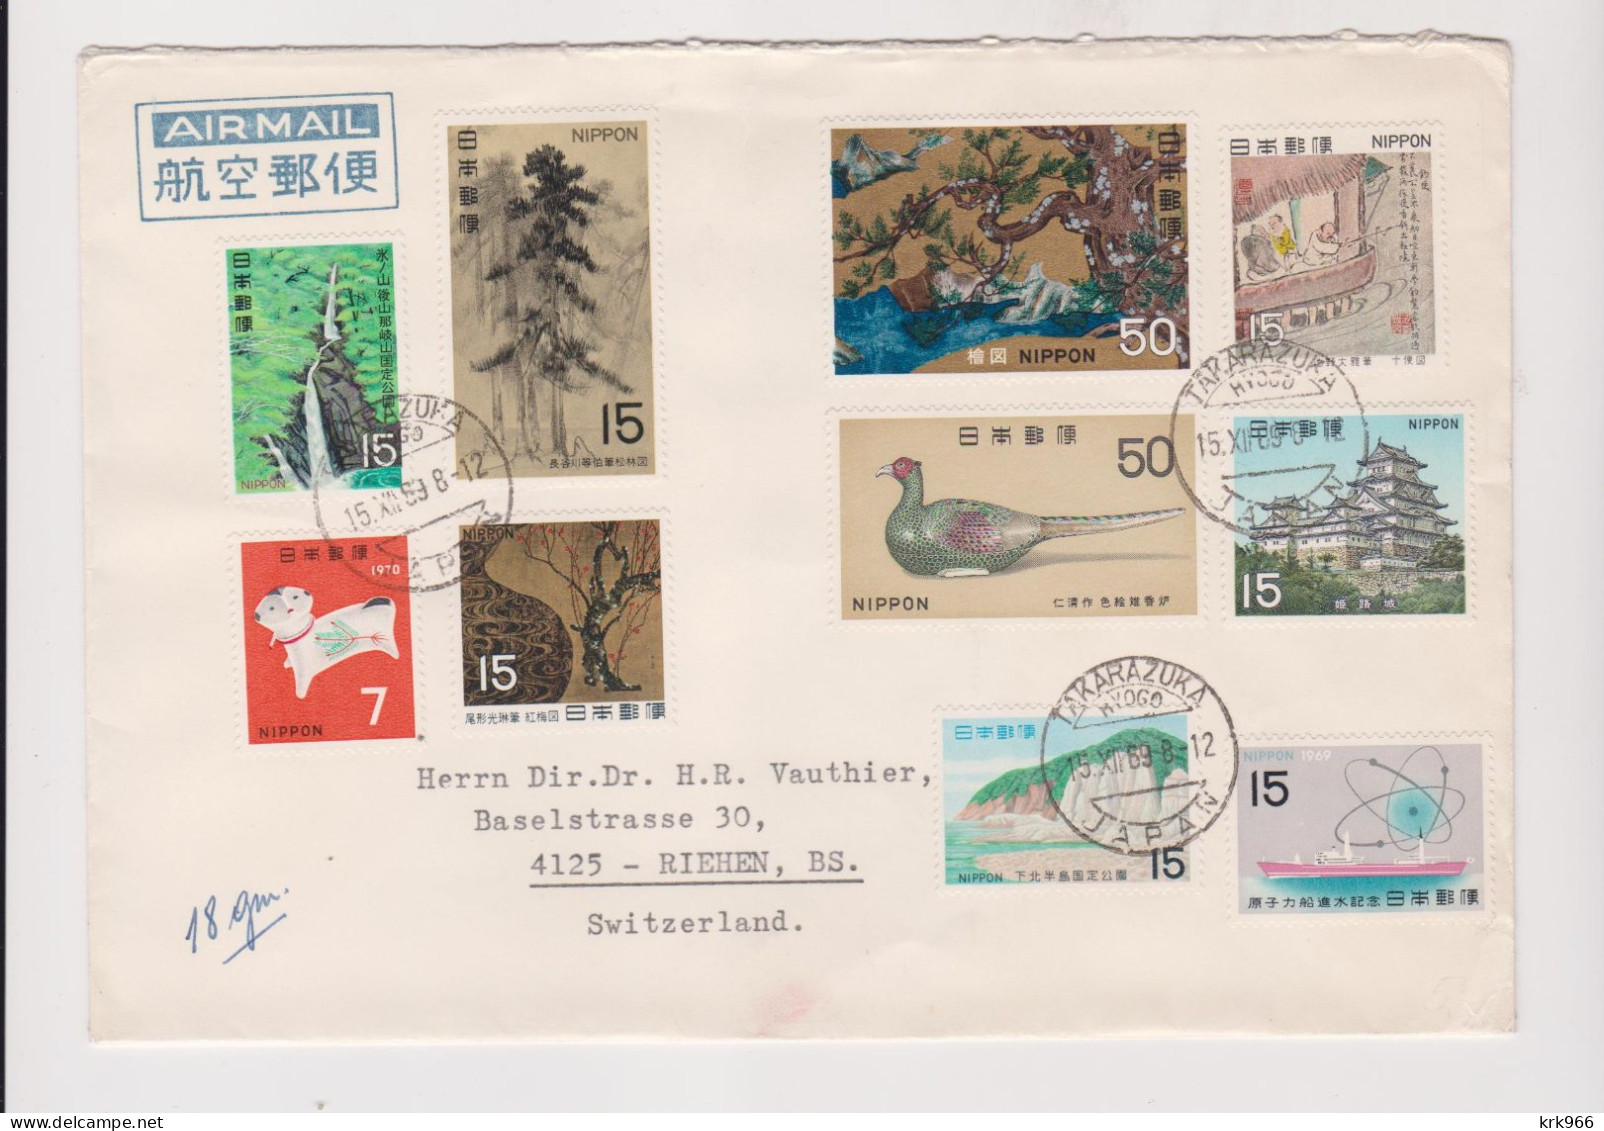 JAPAN 1969 TAKARAZUKA Nice Airmail Cover To Swityerland - Storia Postale